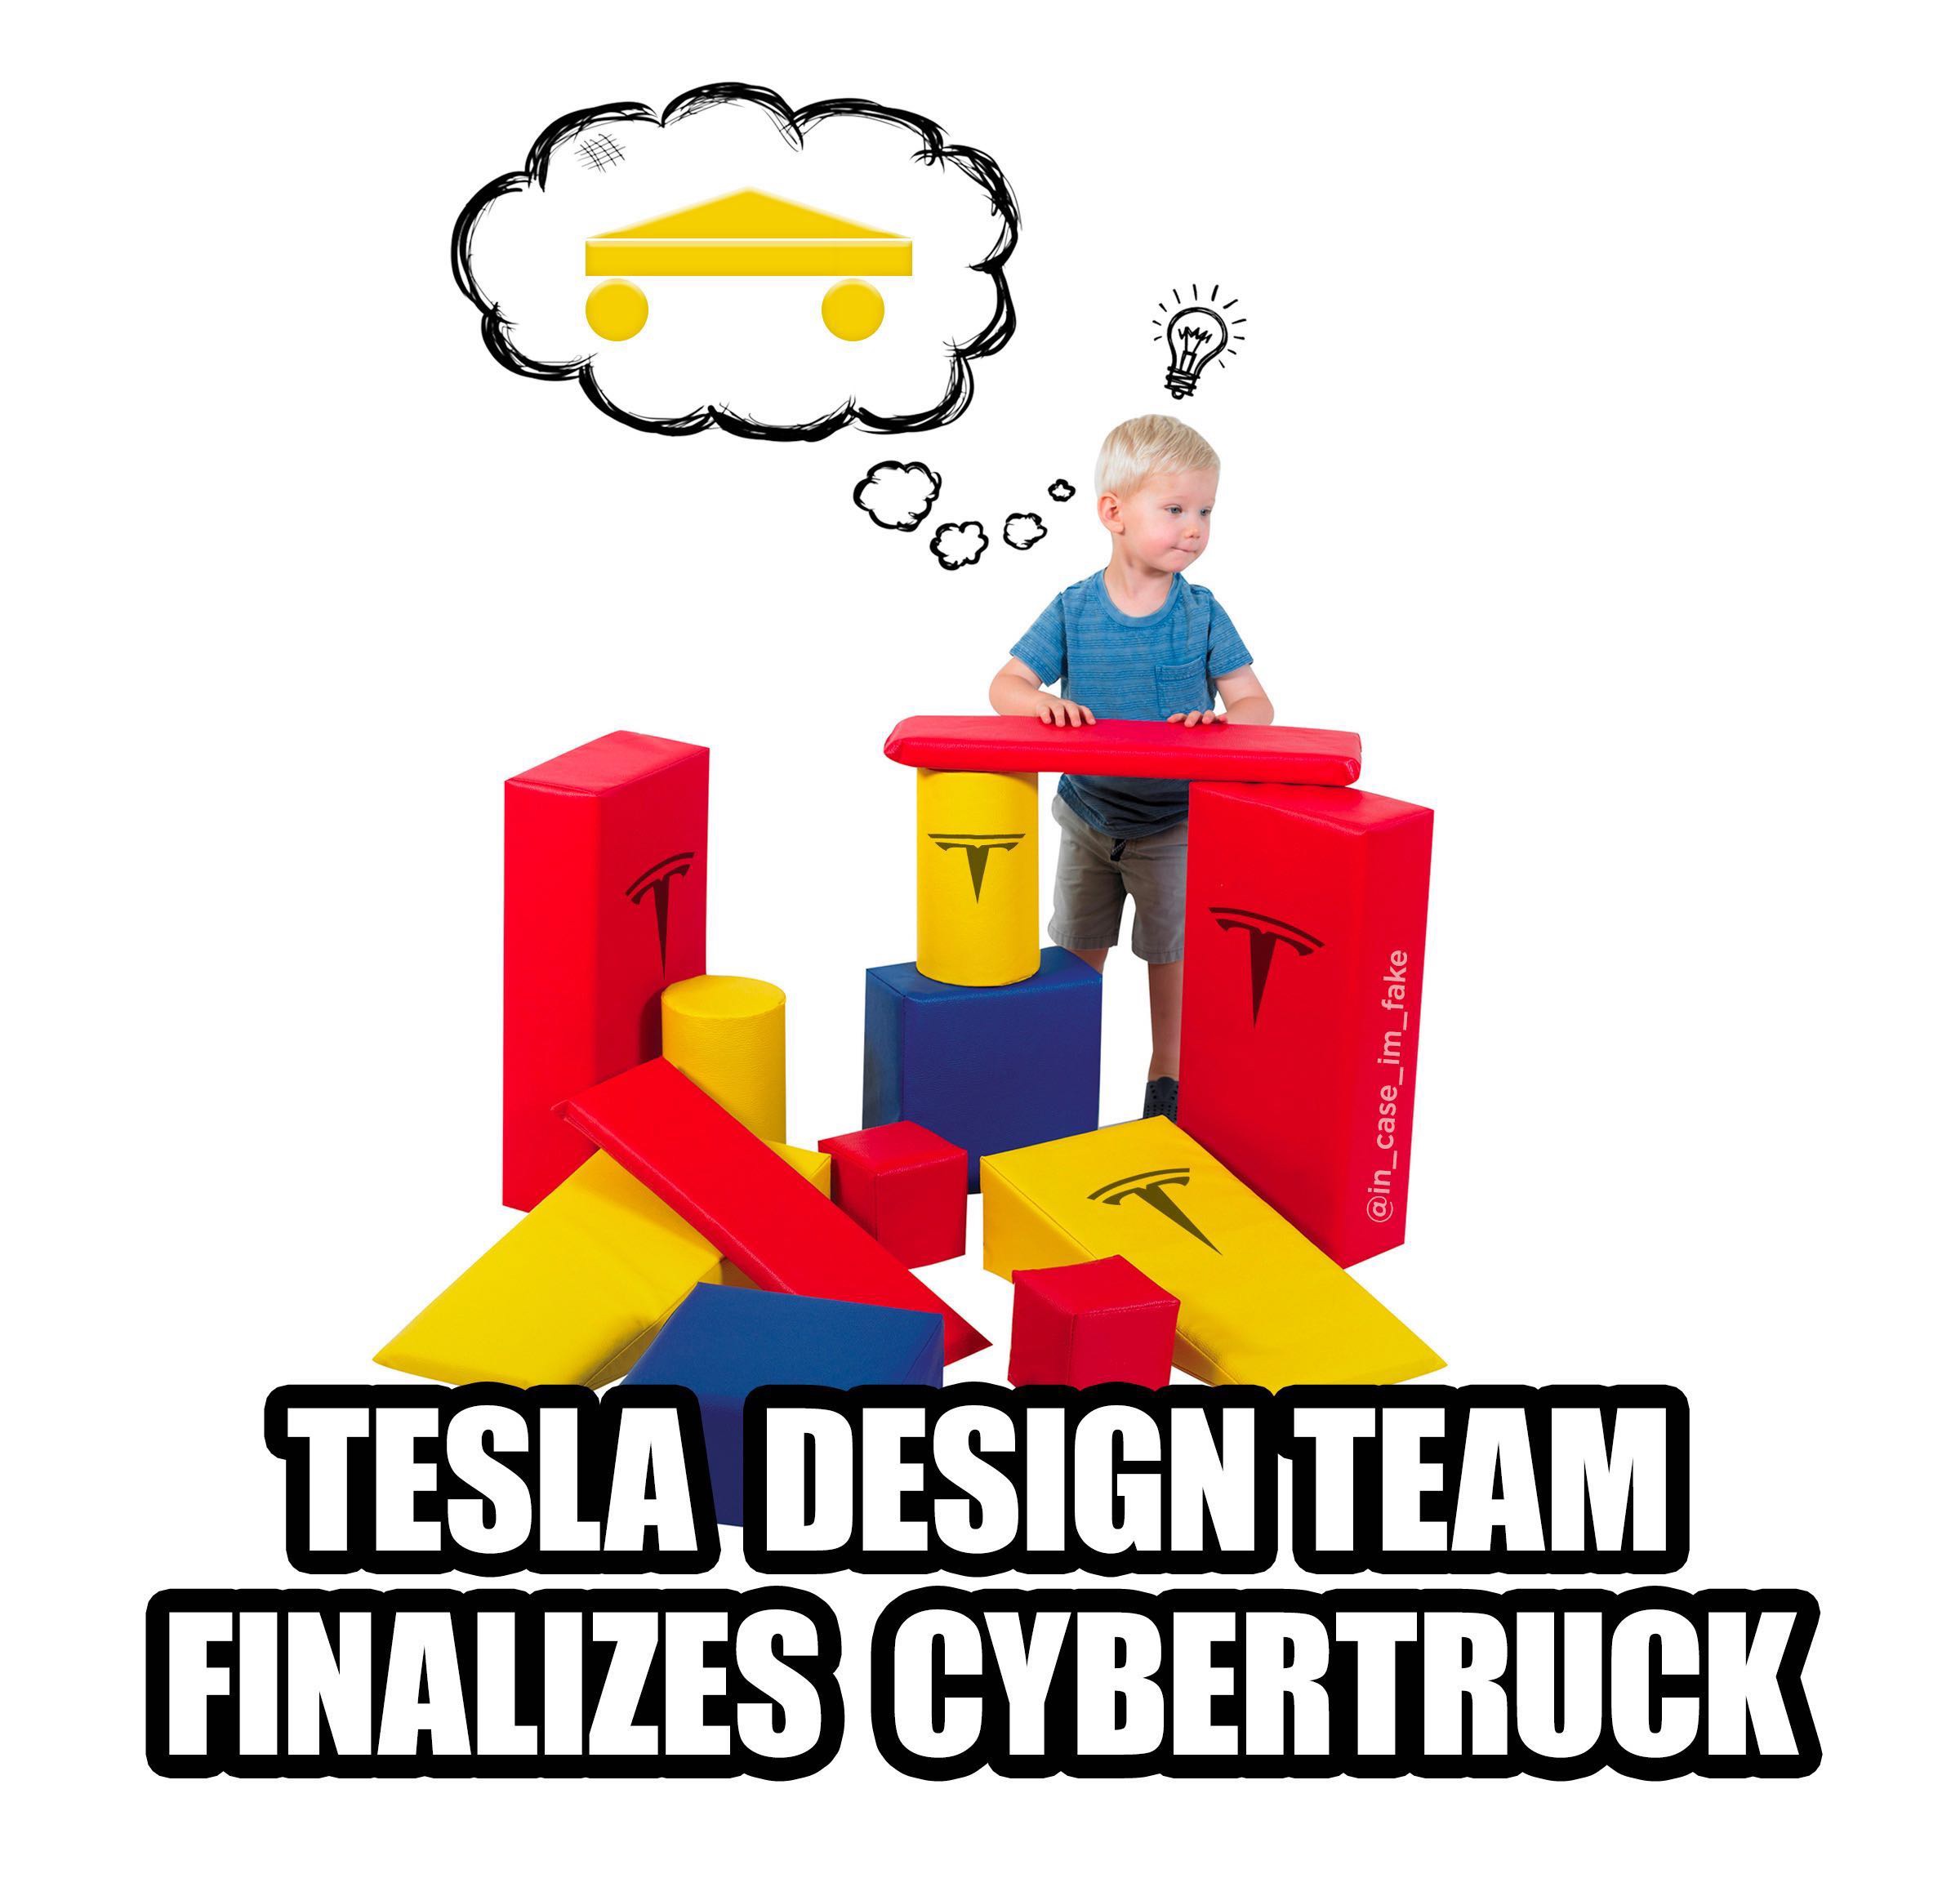 Tesla design team finalizes Cybertruck - memes